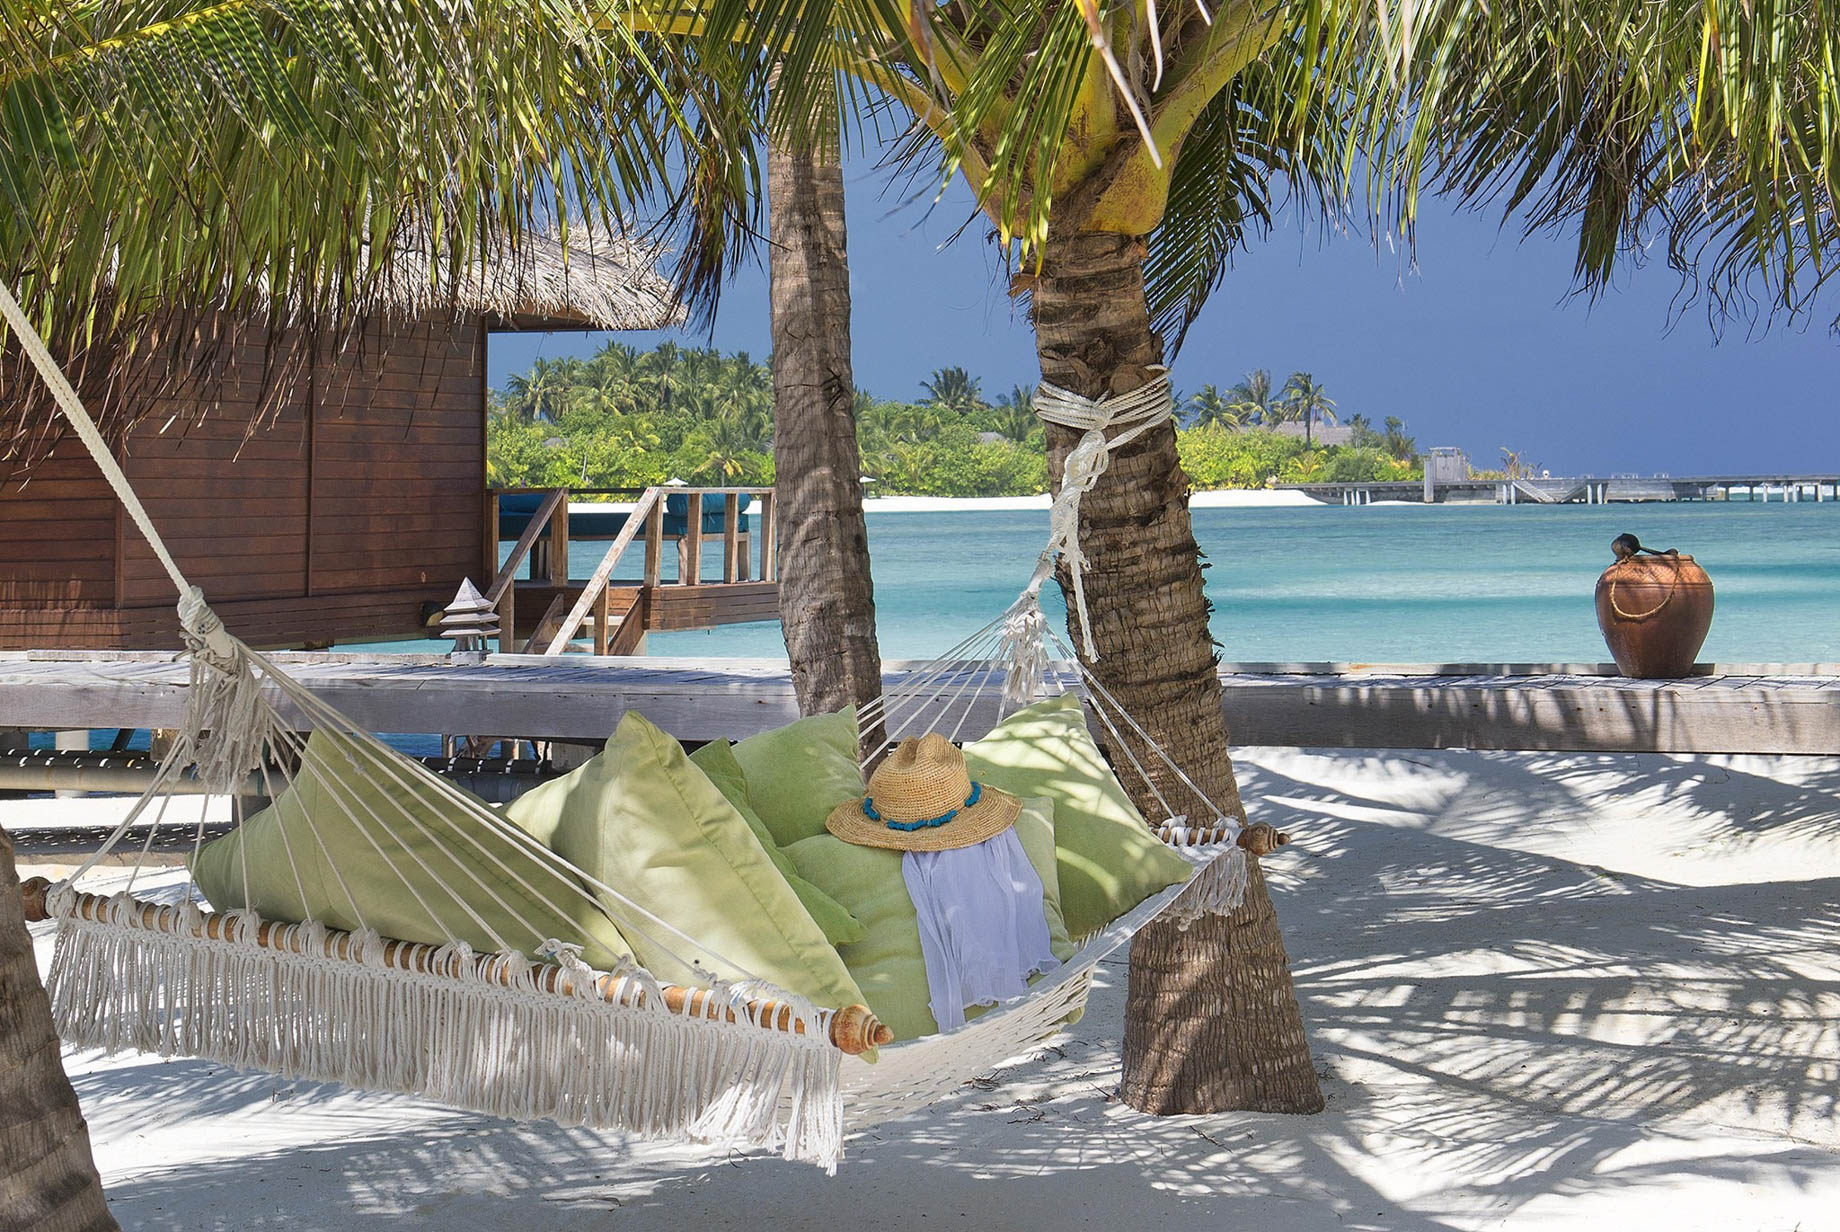 Anantara Veli Maldives Resort – South Male Atoll, Maldives – Beach Hammock